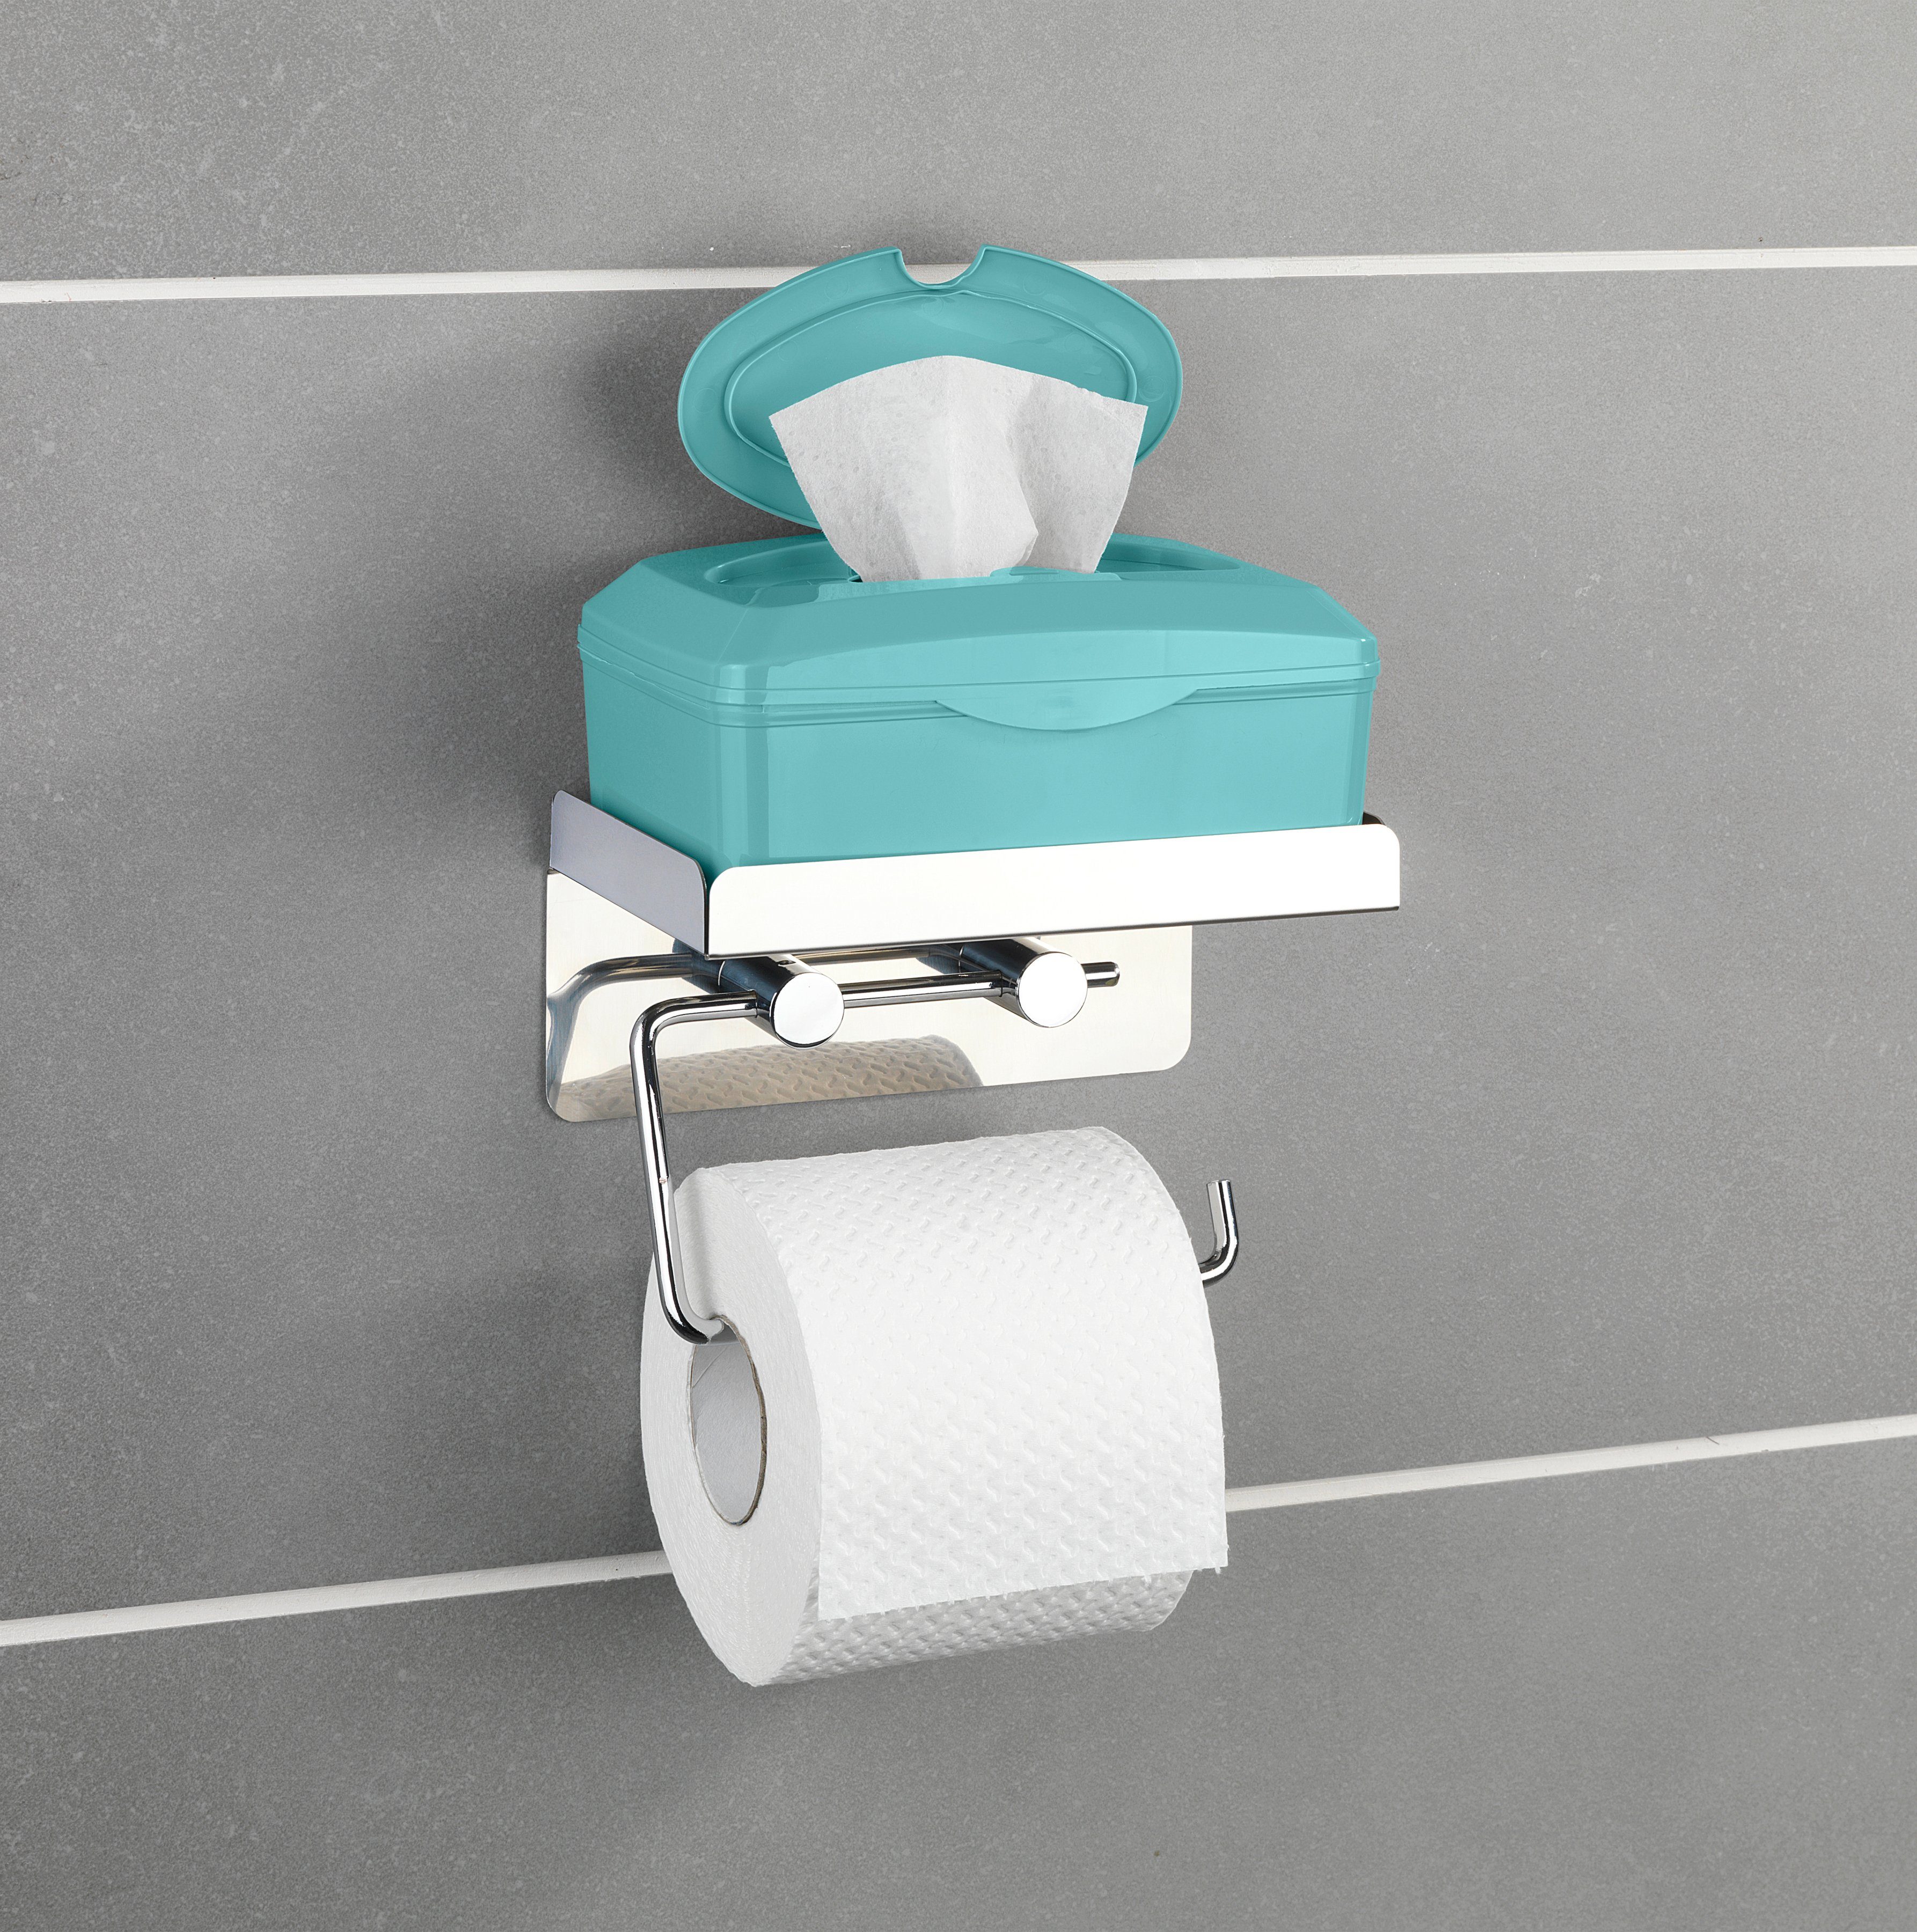 Toilettenpapierhalter, 2in1 WENKO Kombination